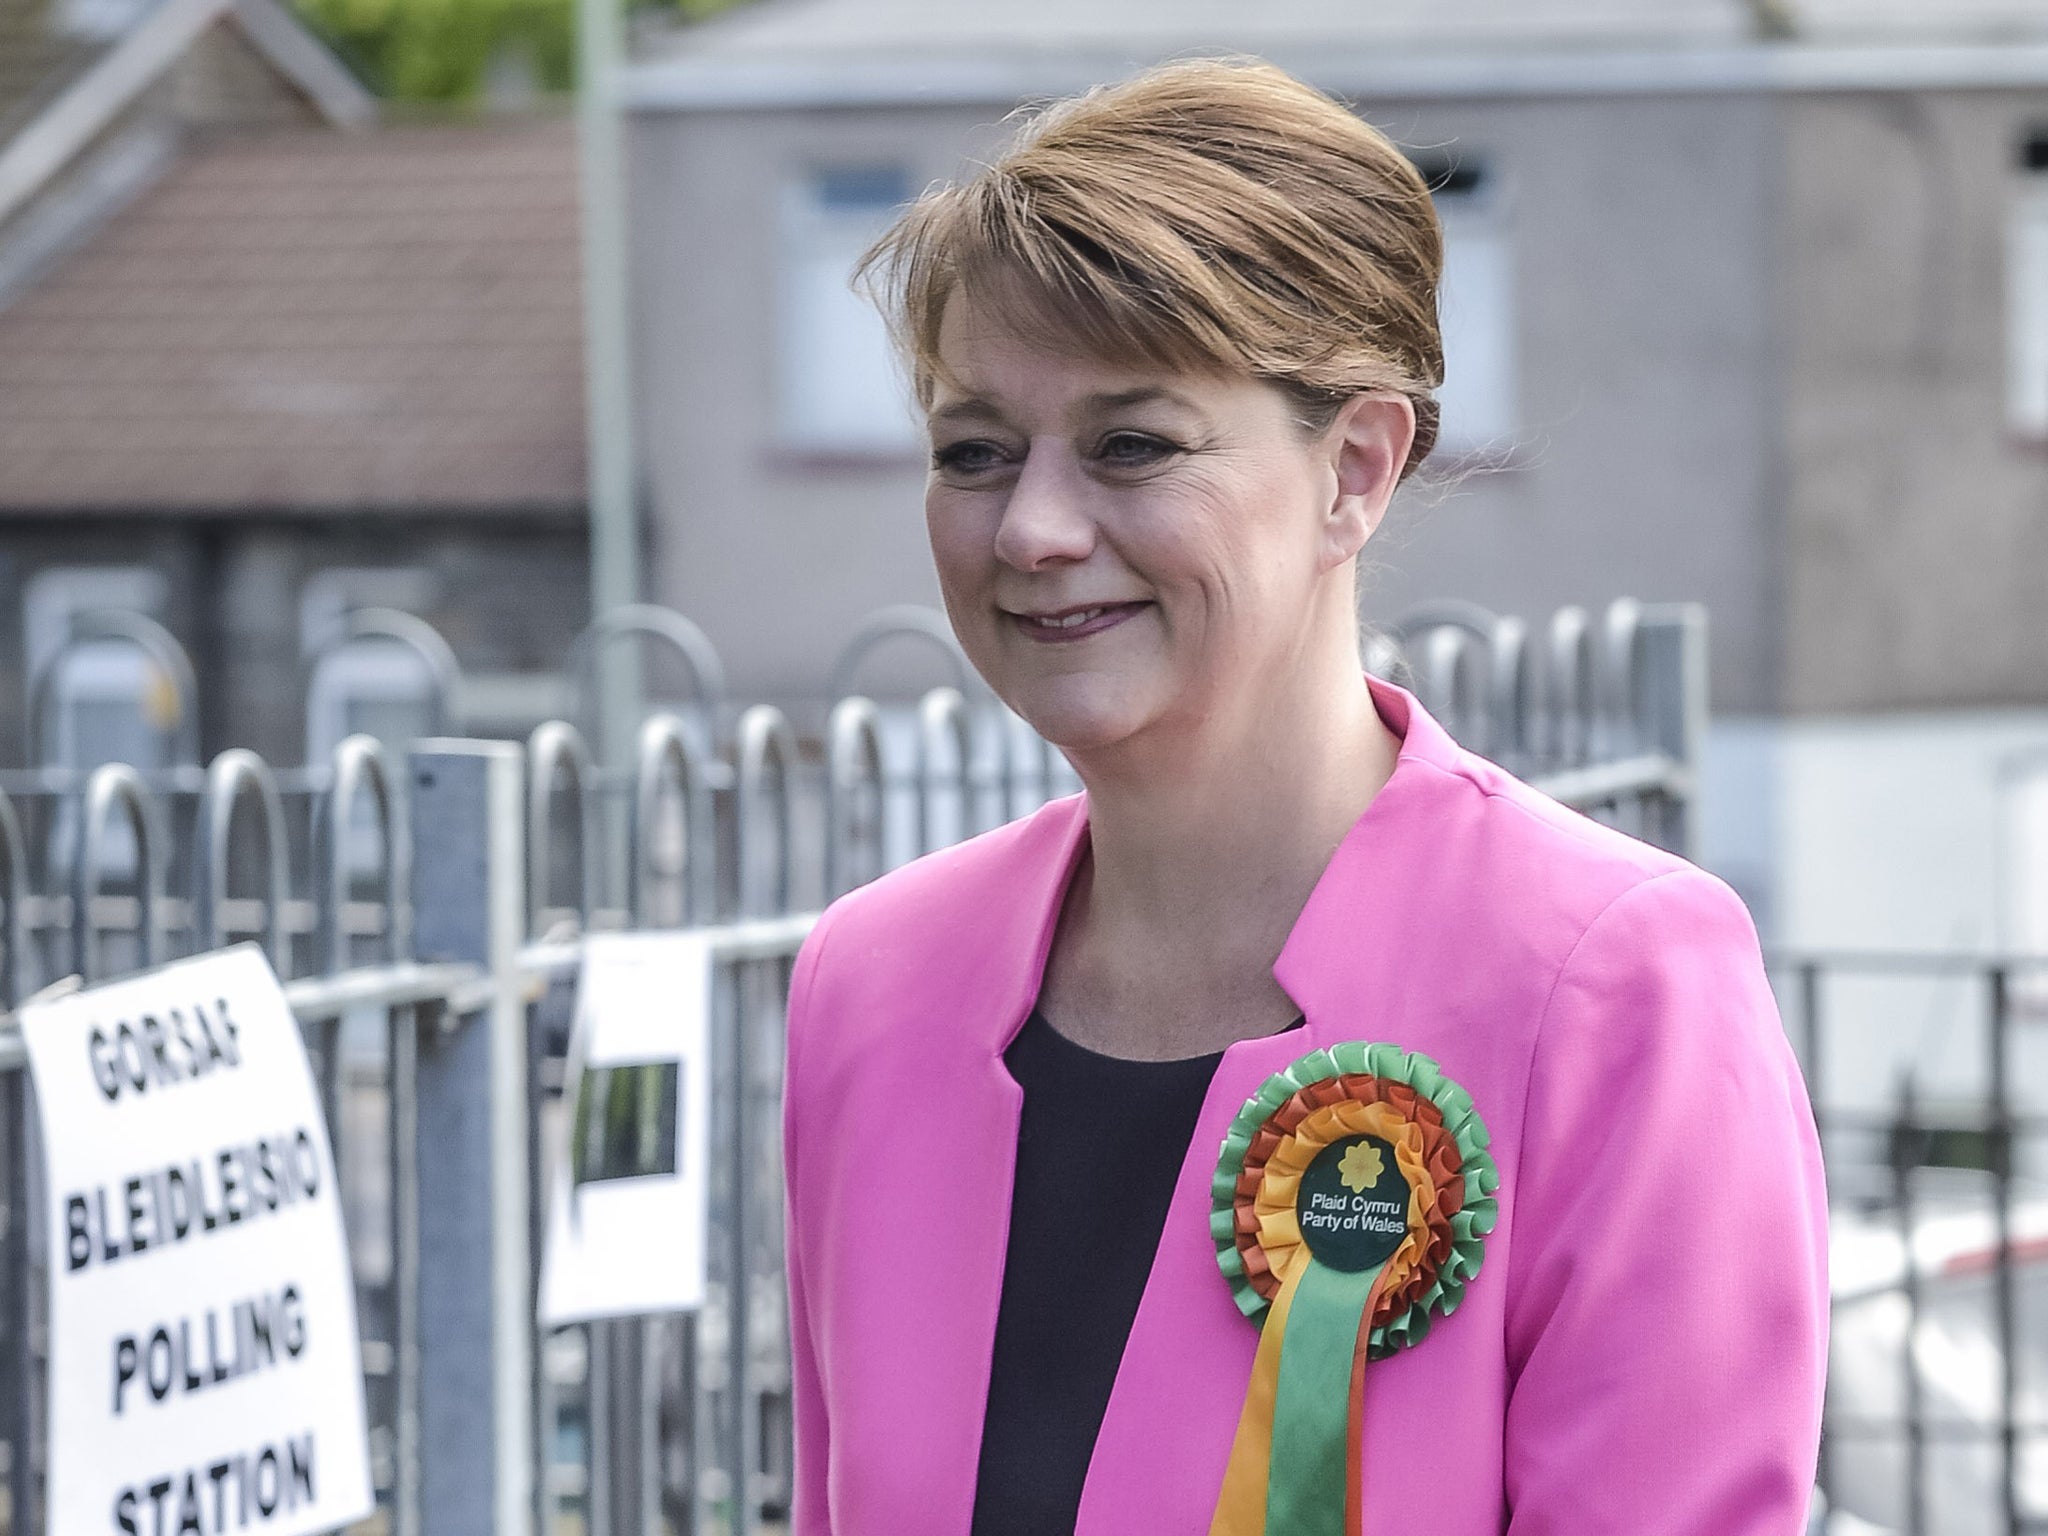 Plaid Cymru leader Leanne Wood arrives at a polling station in Penygraig, Rhondda, Wales